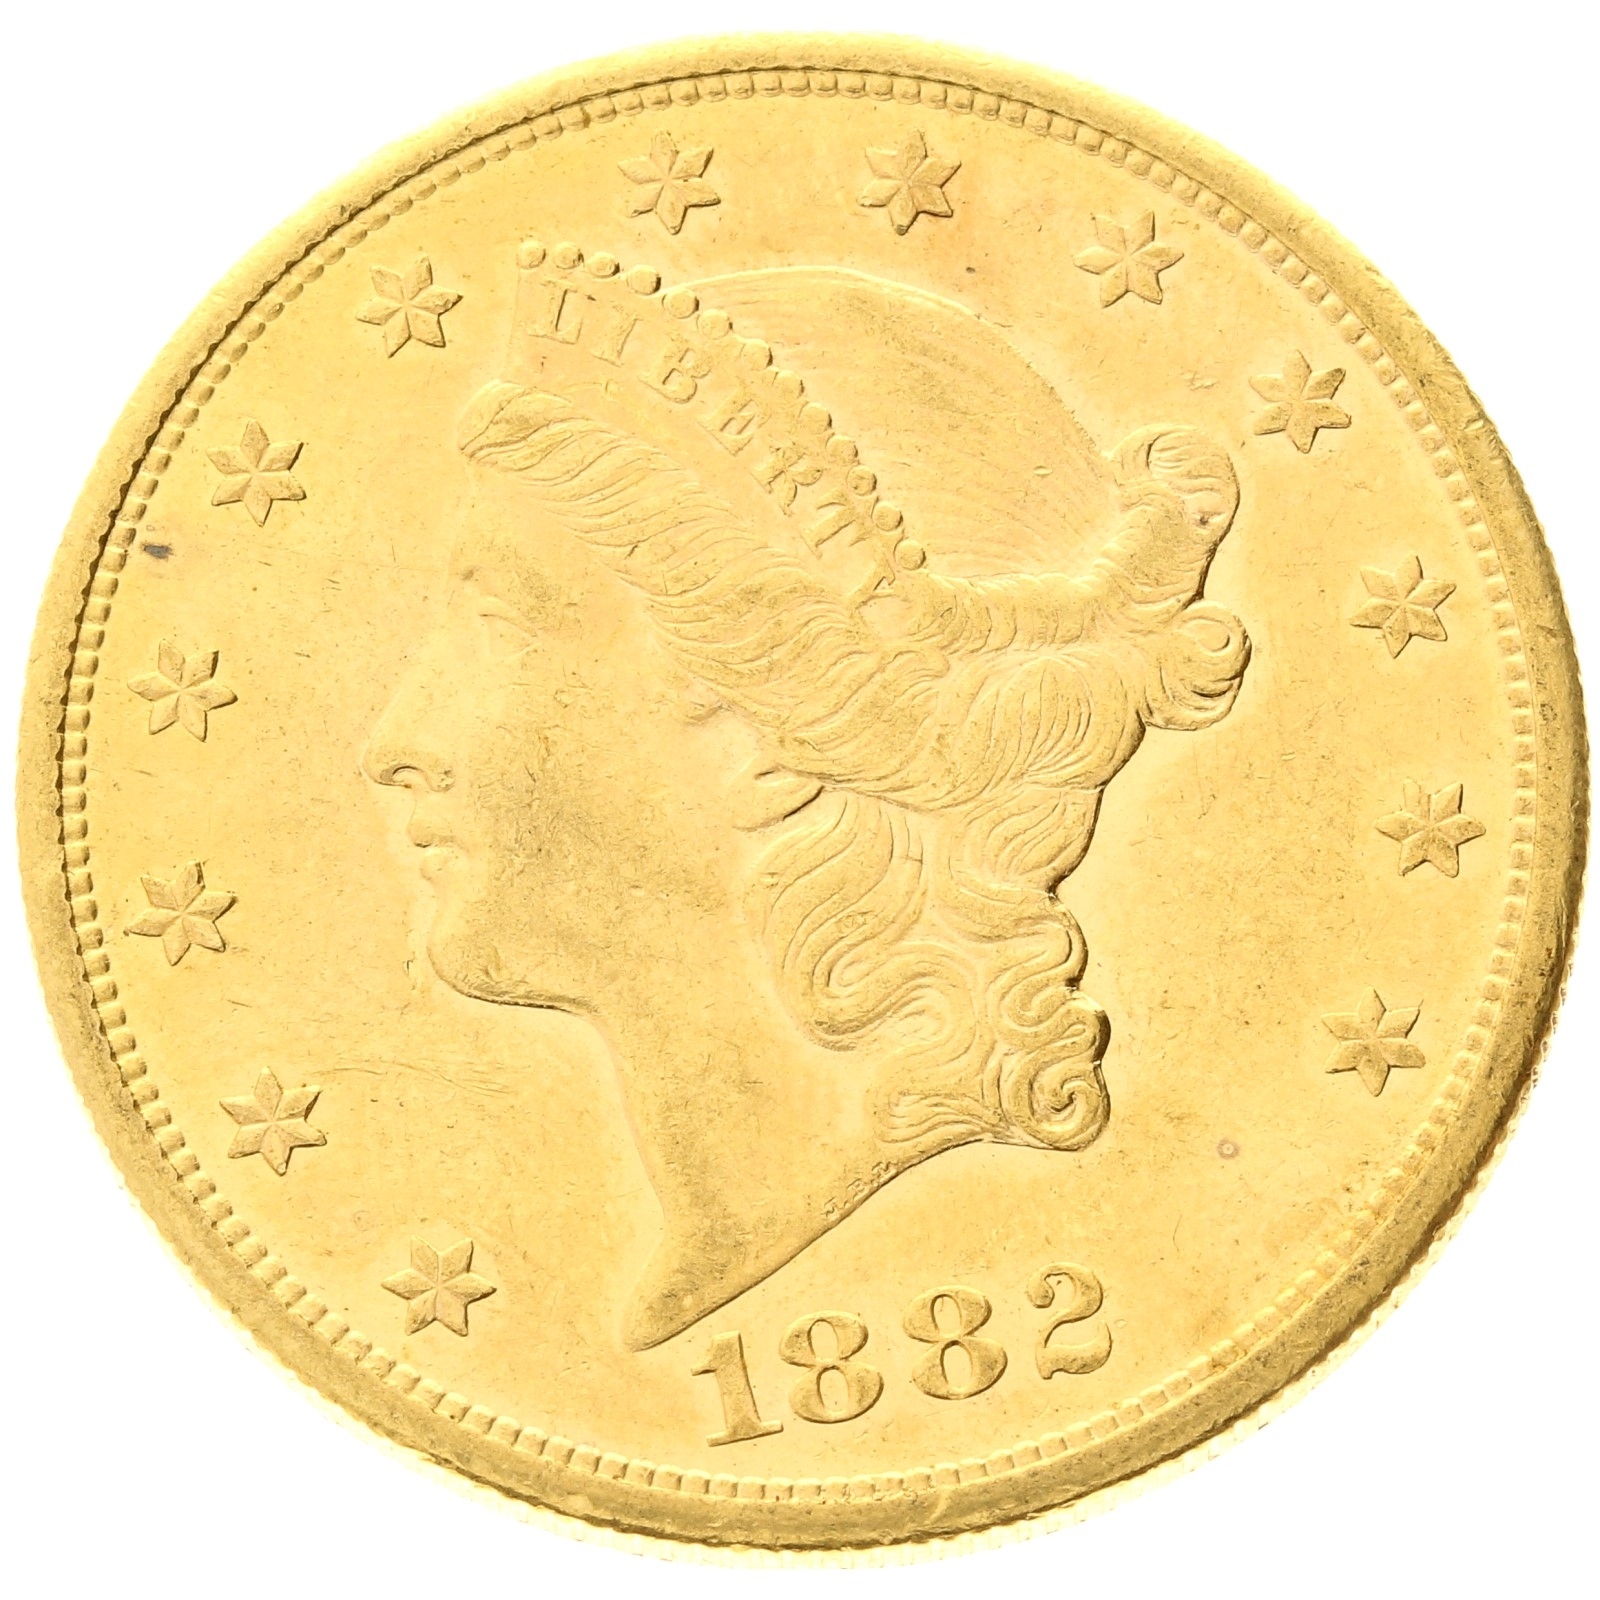 USA - 20 dollars - 1882 - S - Liberty Head 